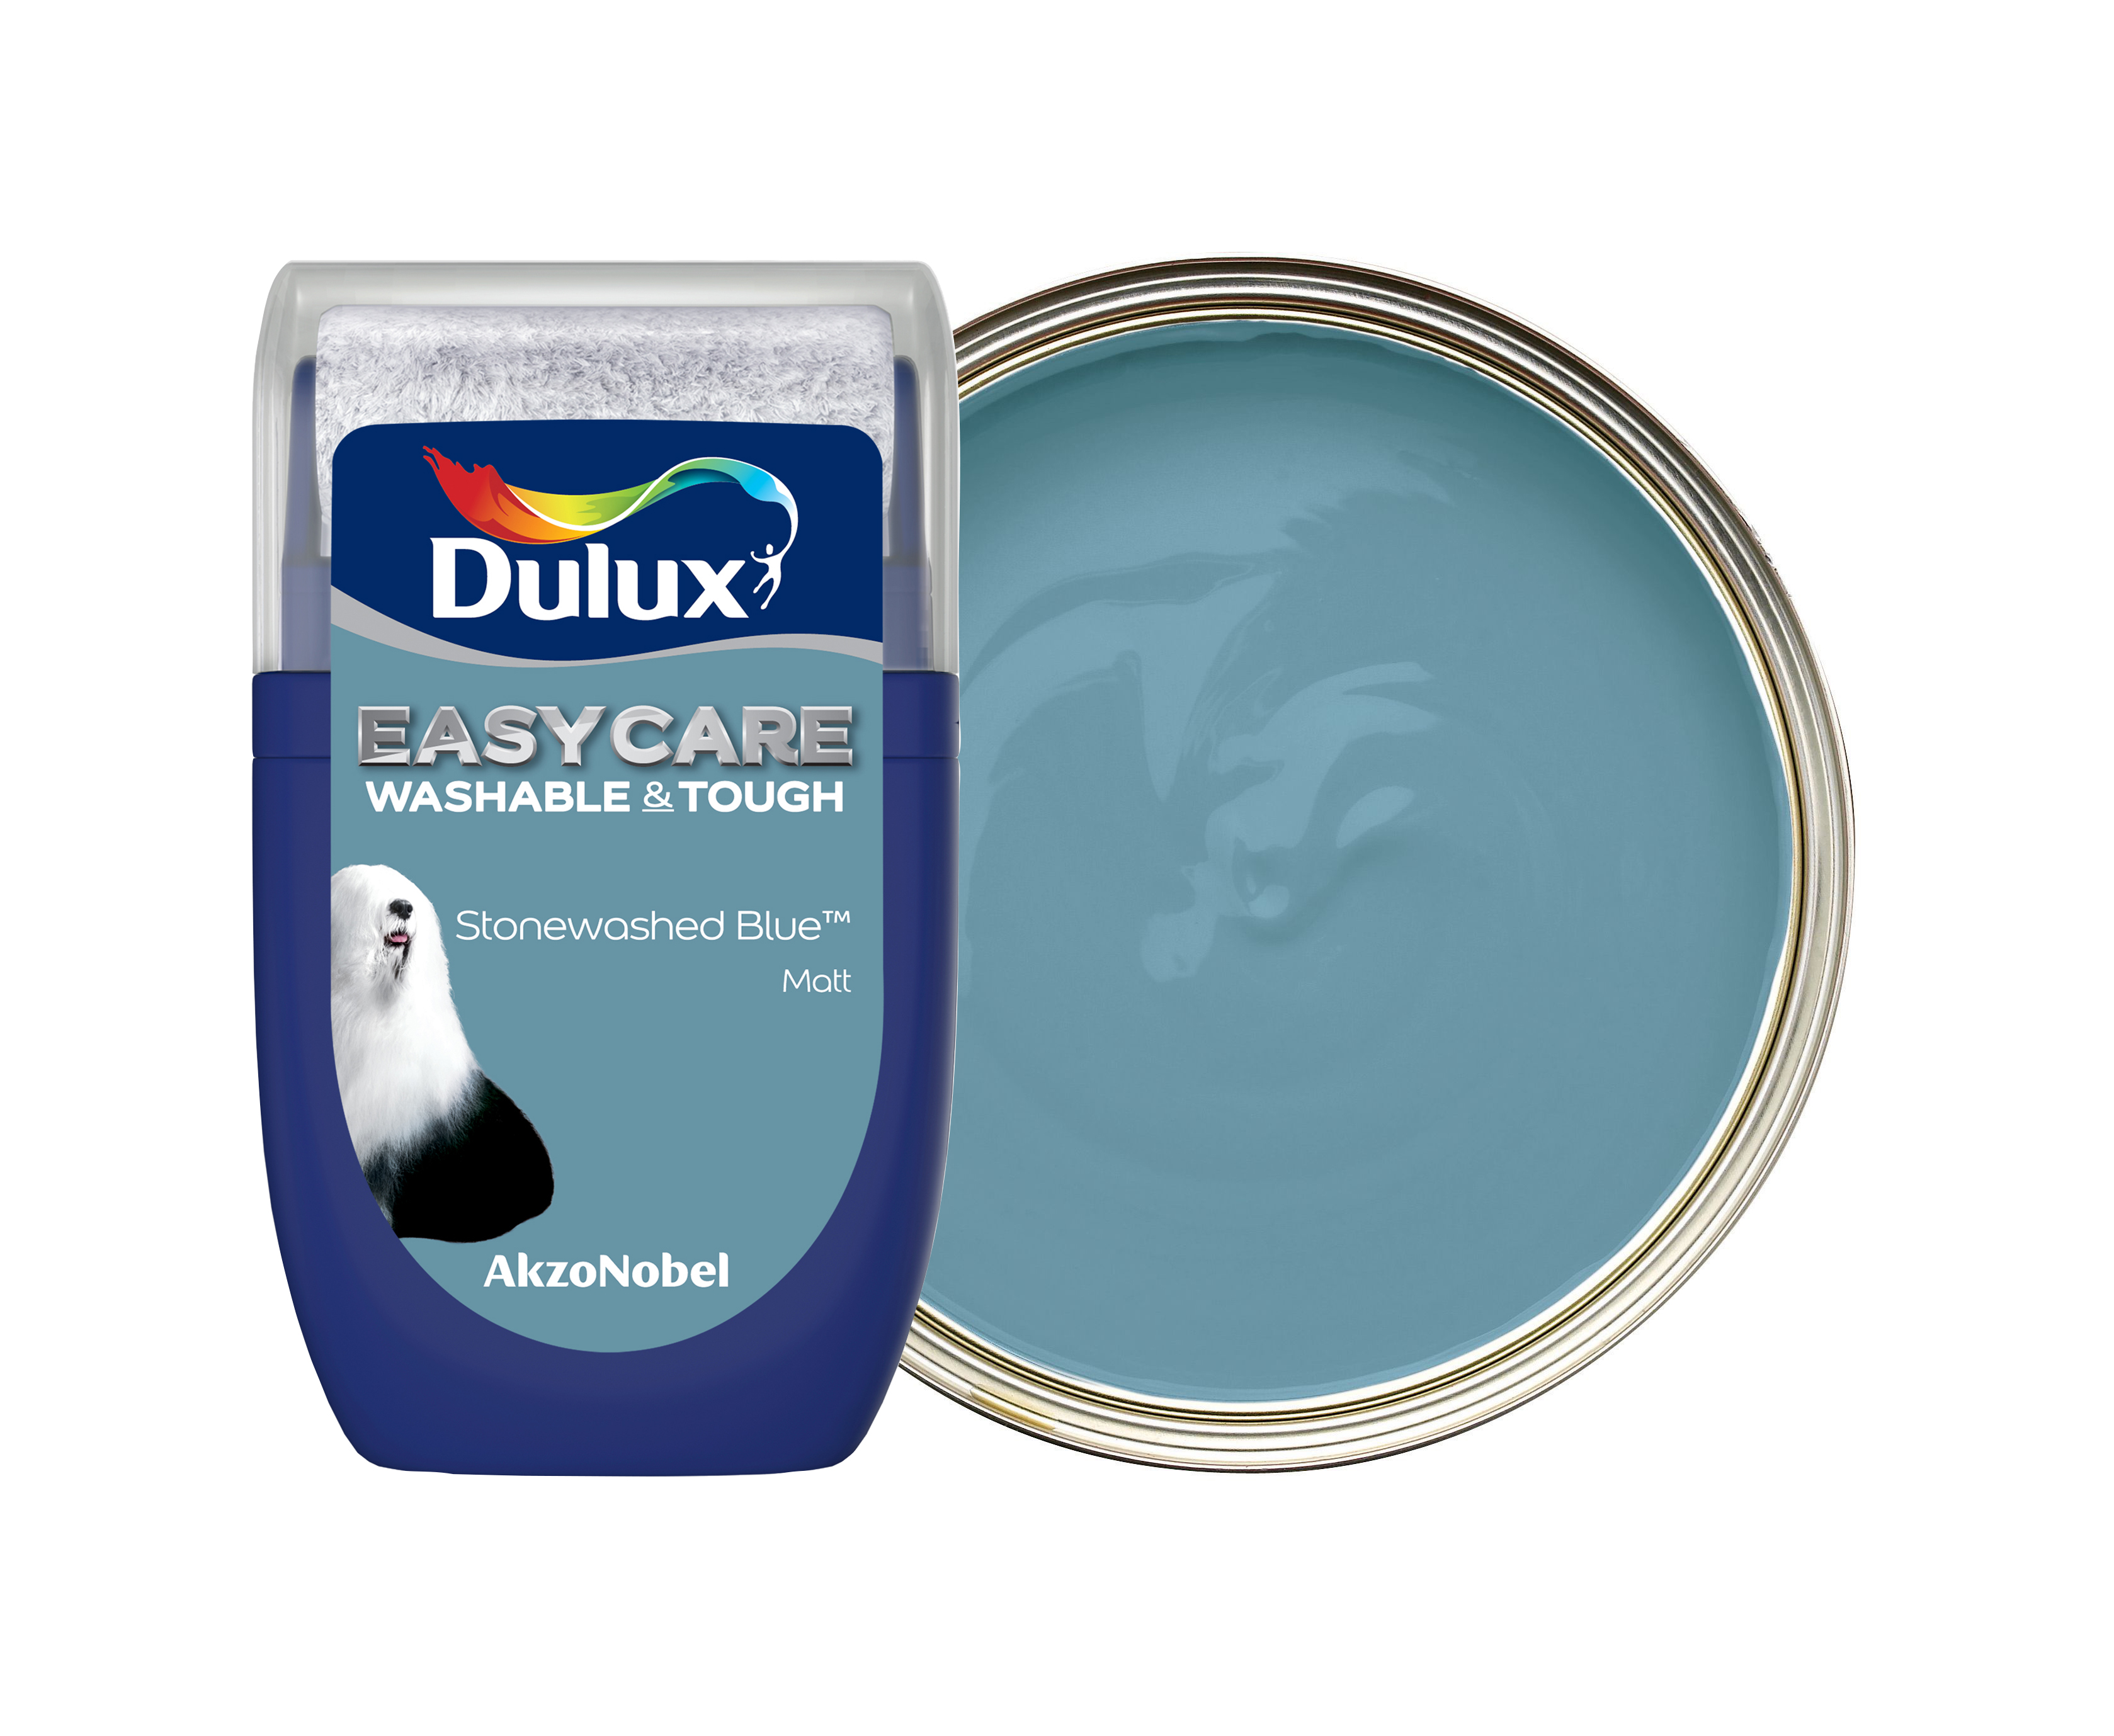 Dulux Easycare Washable & Tough Paint Tester Pot - Stonewashed Blue - 30ml